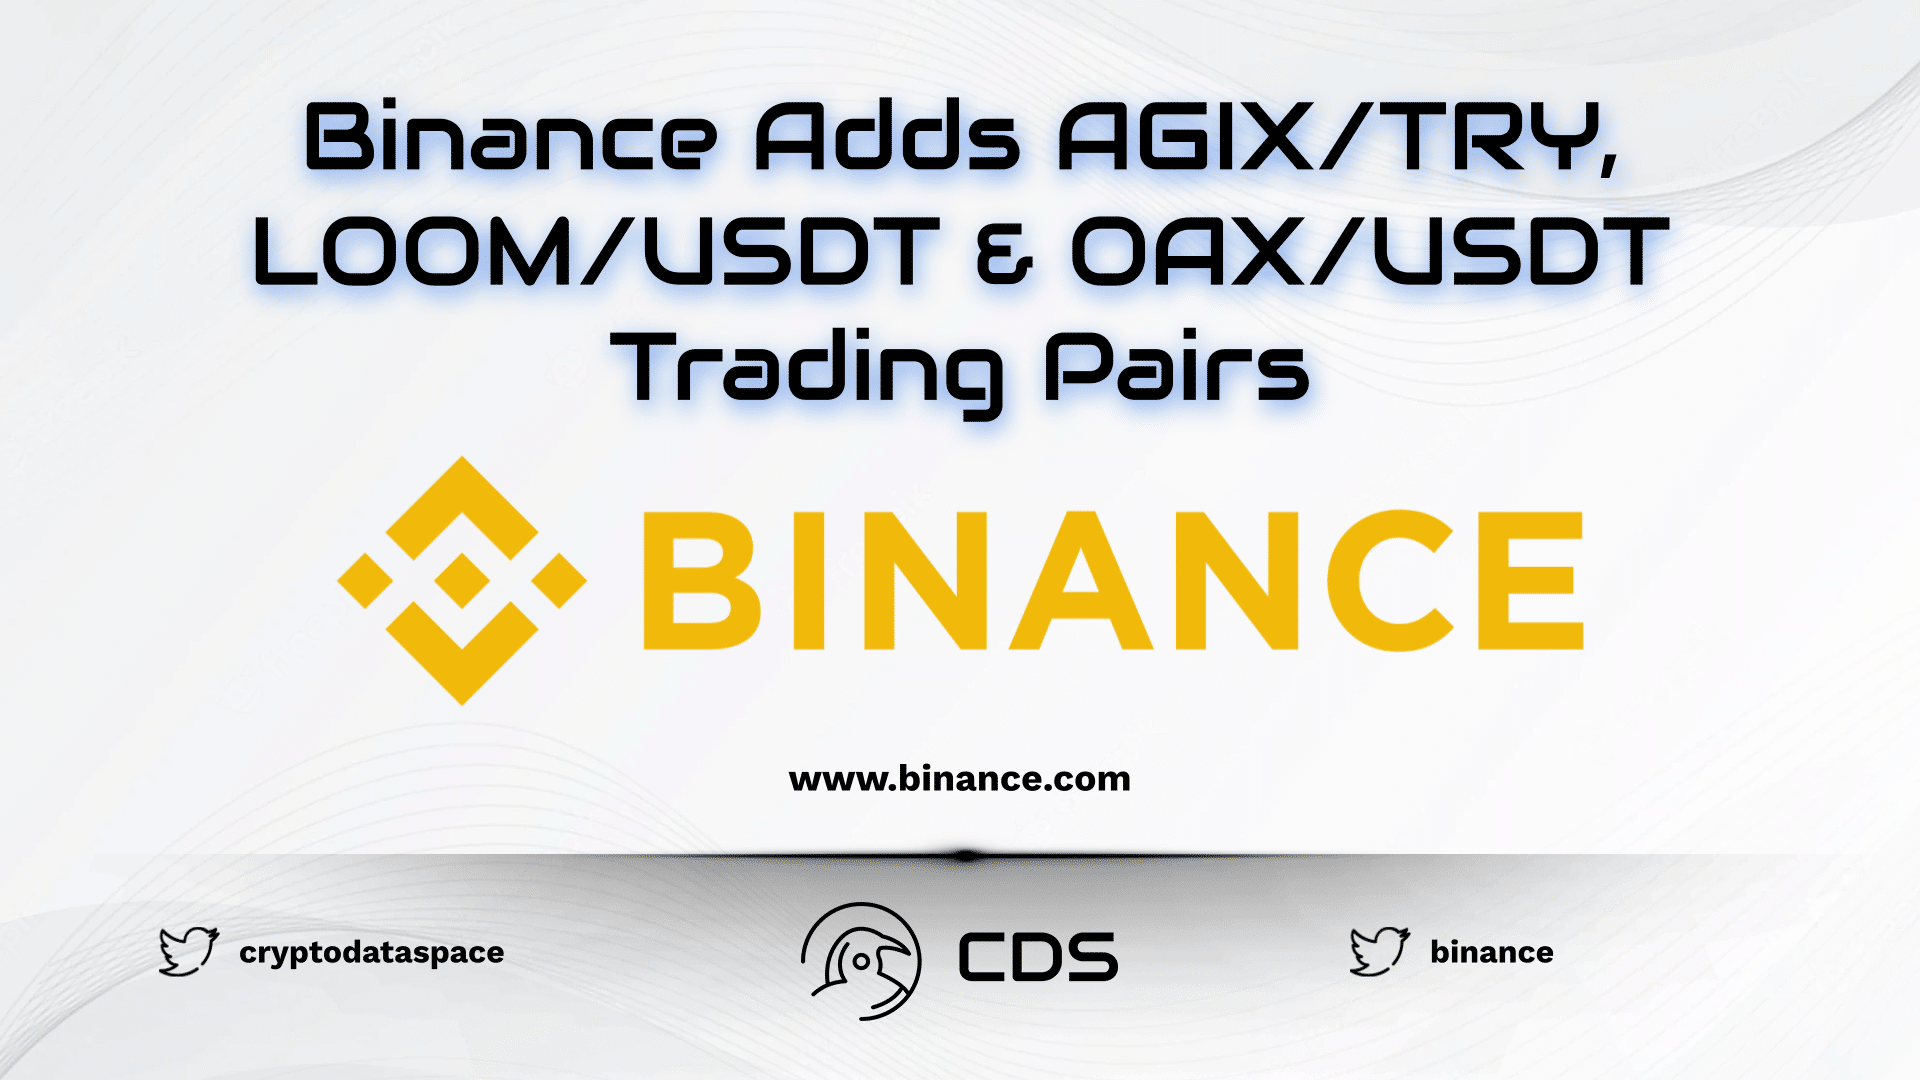 Binance Adds AGIX/TRY, LOOM/USDT & OAX/USDT Trading Pairs